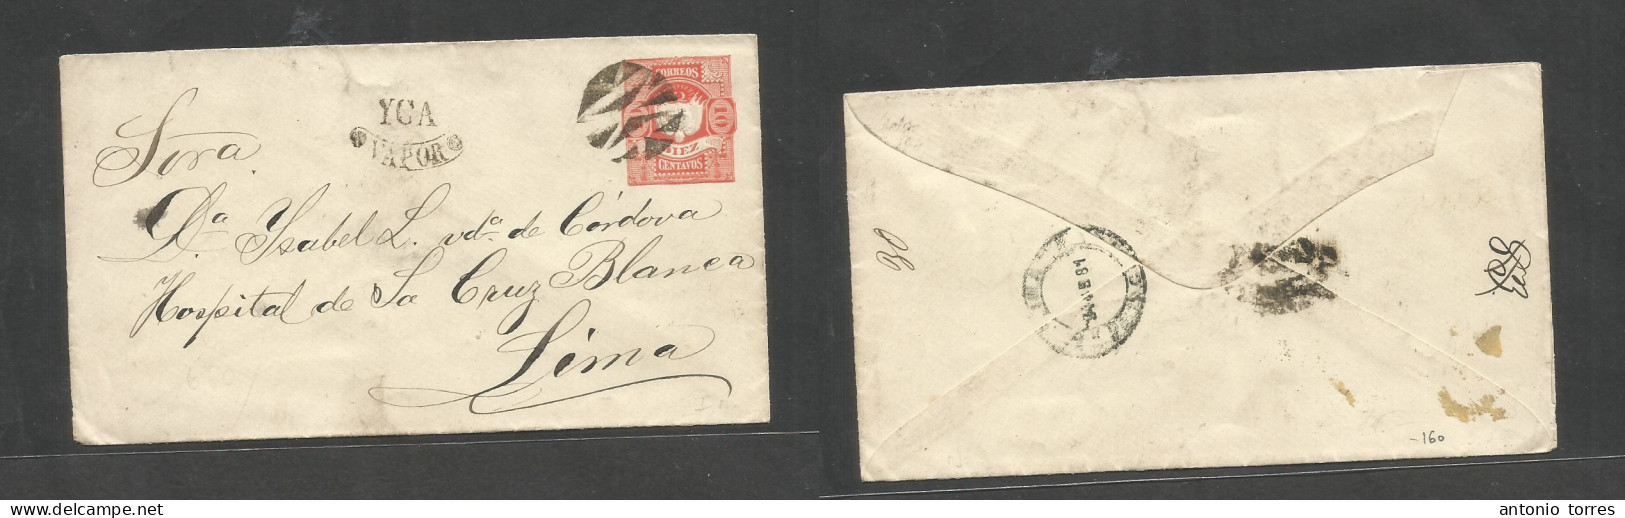 Peru. 1881 Yca - Lima (24 March) 10c Vermilion Embossed Stationary Envelope, Depart Cork Cancel + "VIA VAPOR" Illustrate - Perú